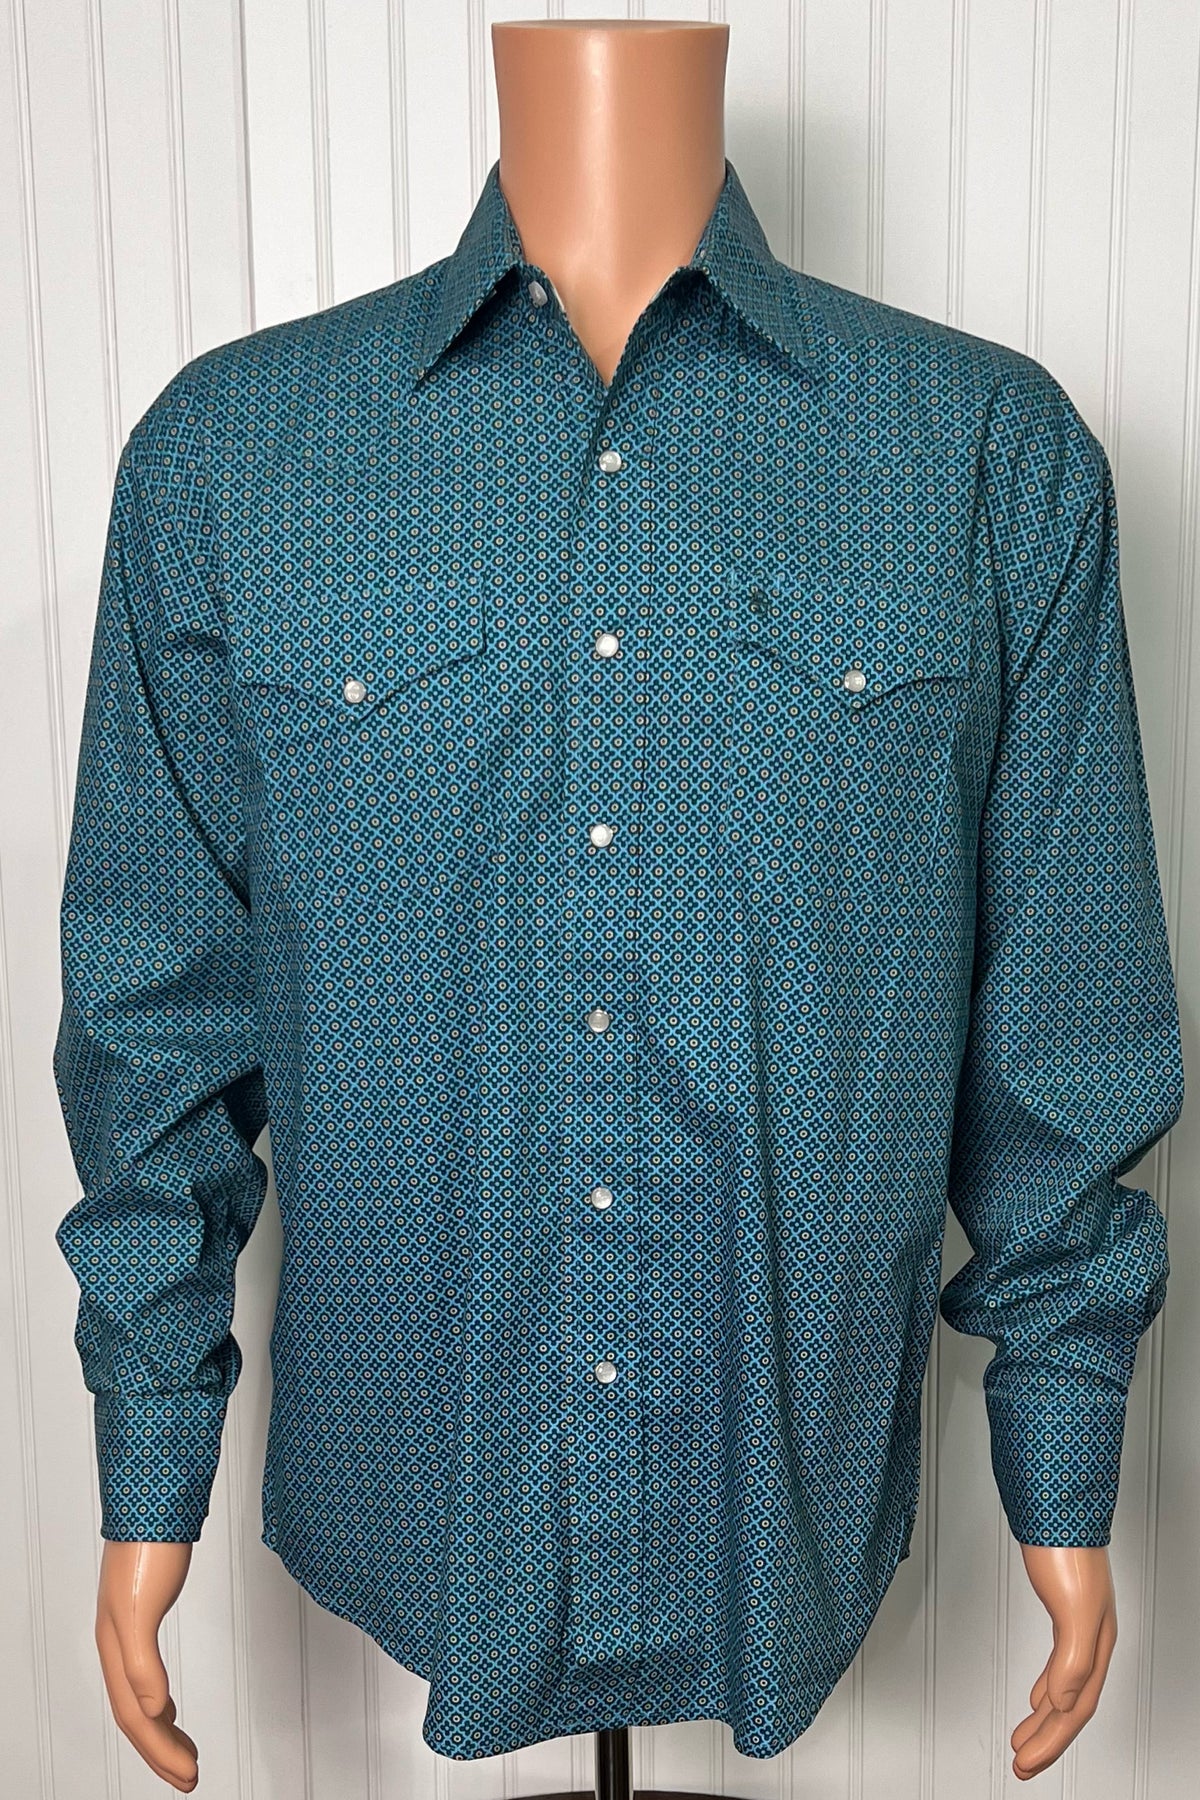 Men's Four Leaf Foulard Green Long Sleeve Shirt by Stetson-Men's Dress Shirt-Roper/Stetson-Gallop 'n Glitz- Women's Western Wear Boutique, Located in Grants Pass, Oregon